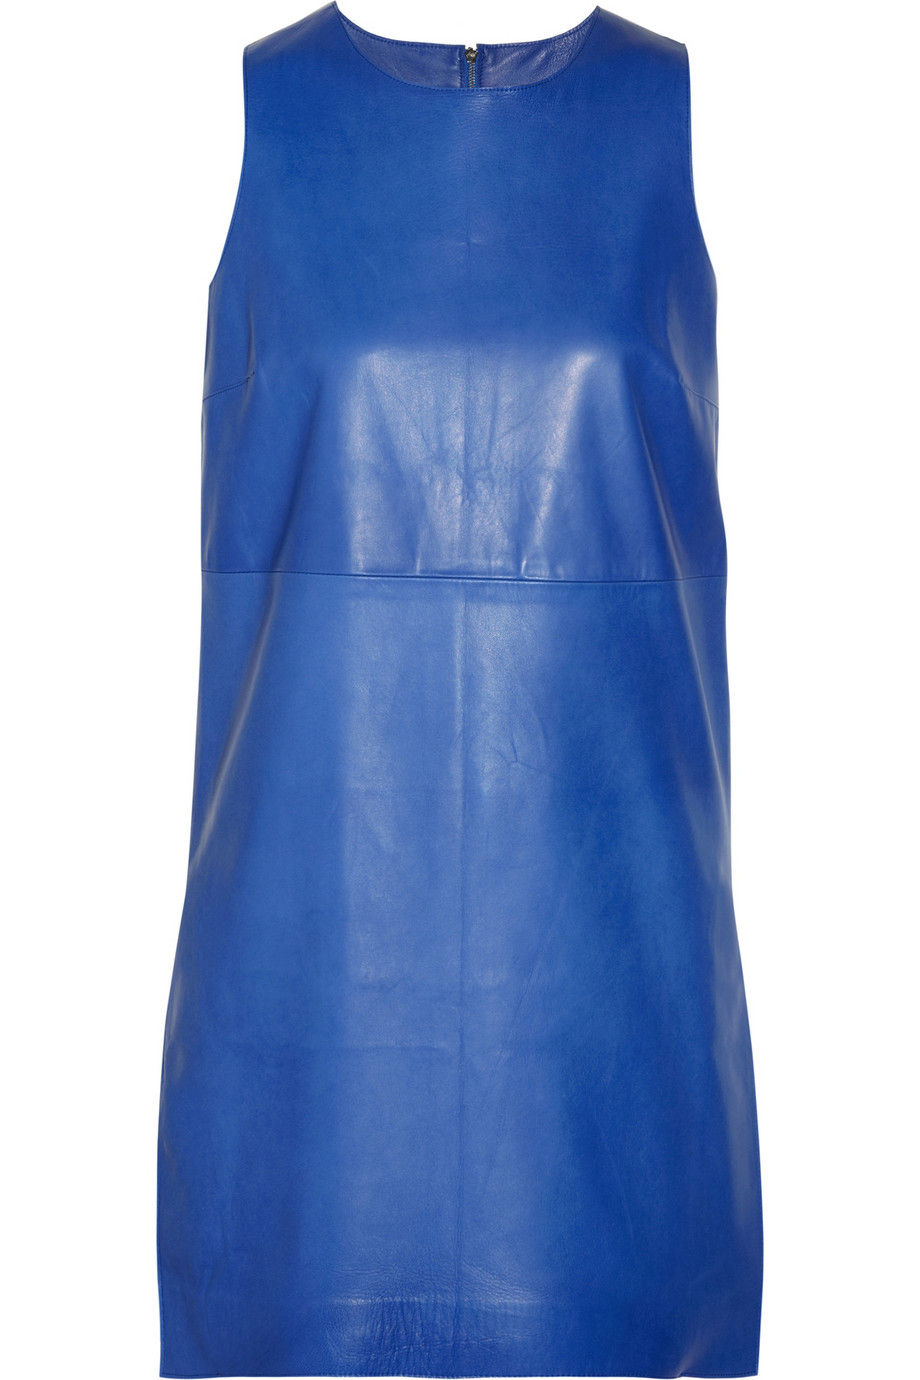 Lyst - Richard Nicoll Leather Mini Dress in Blue